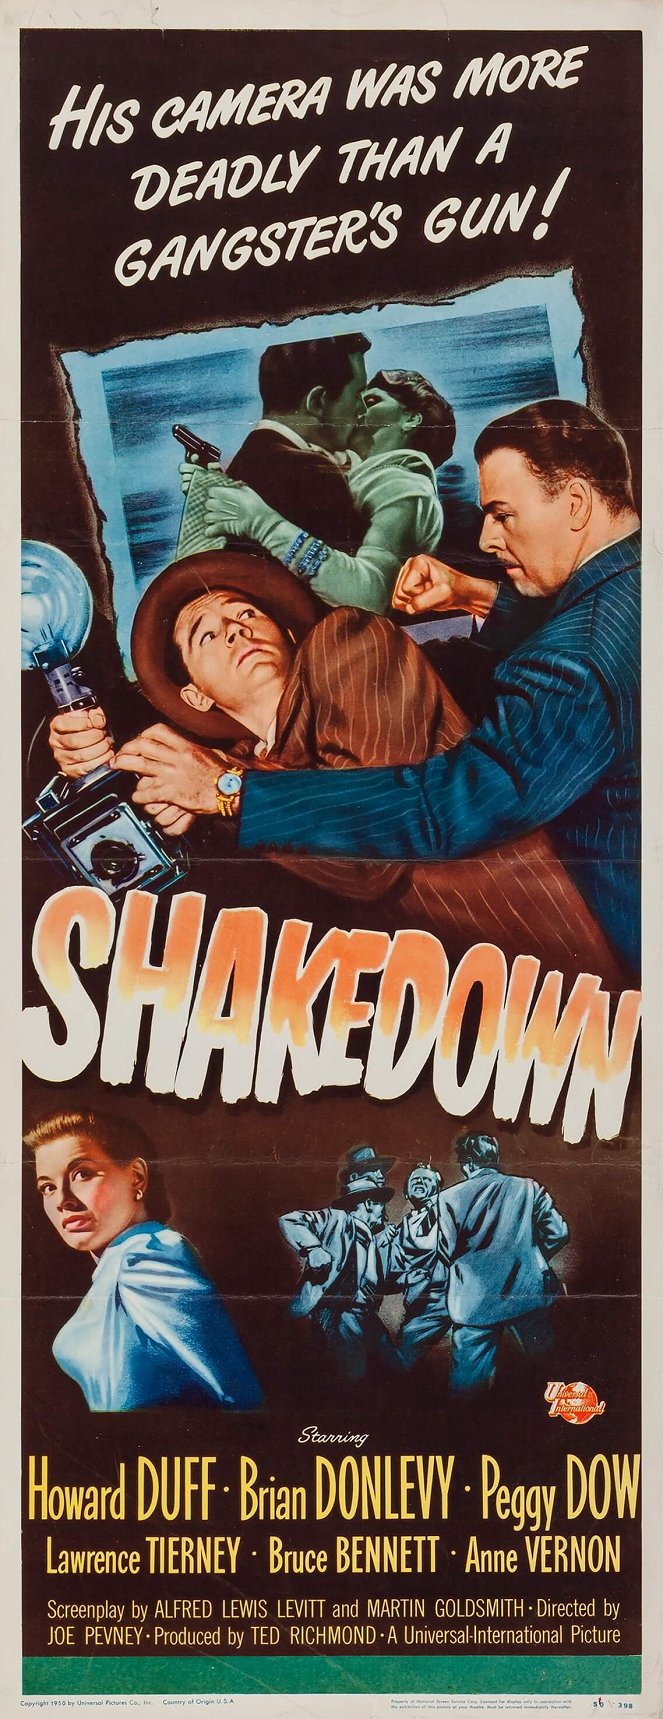 Shakedown - Posters